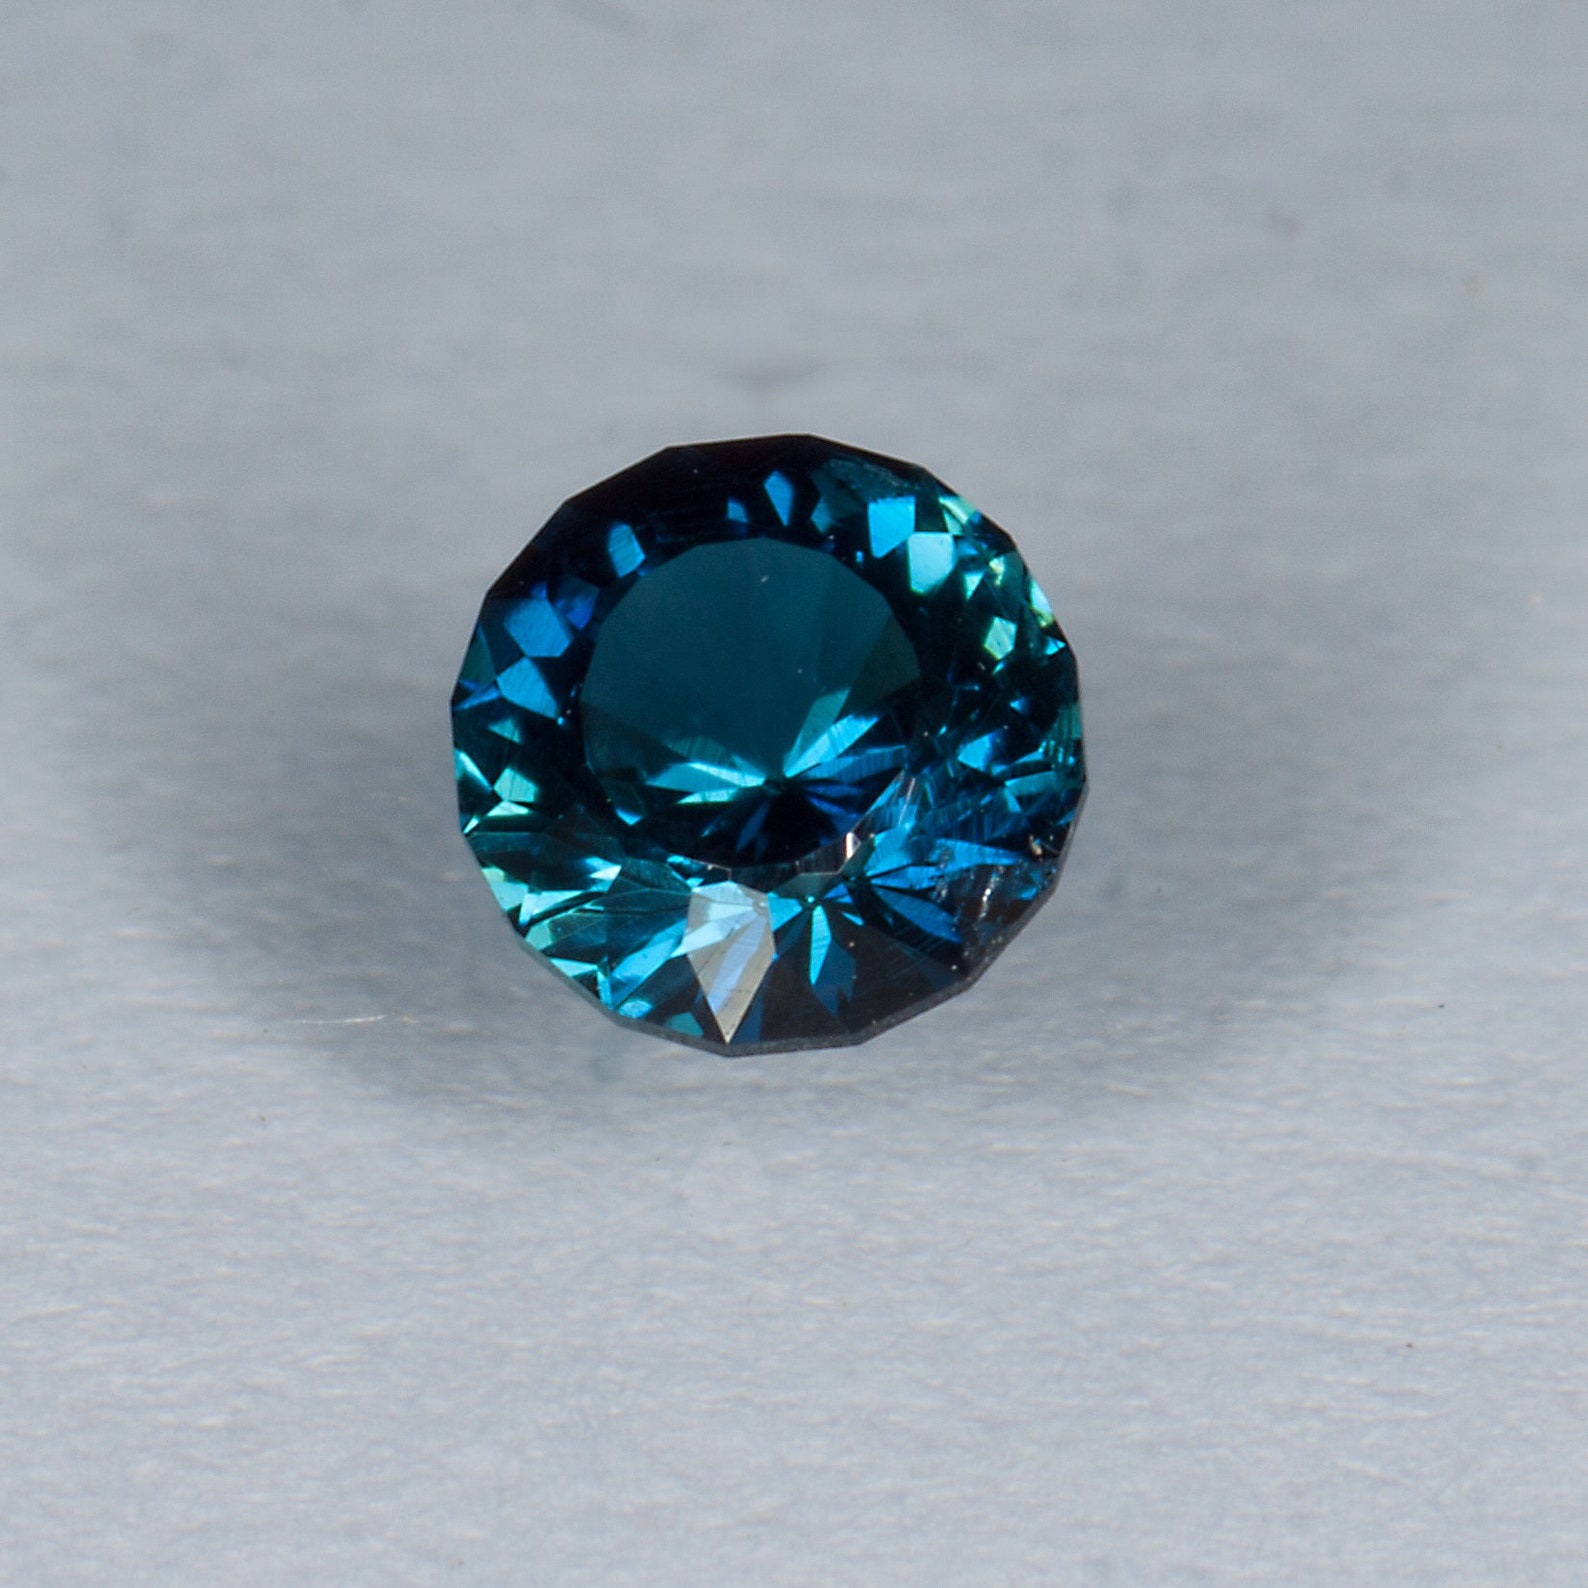 Loose Teal blue tourmaline gemstone jewelry making precision | Etsy